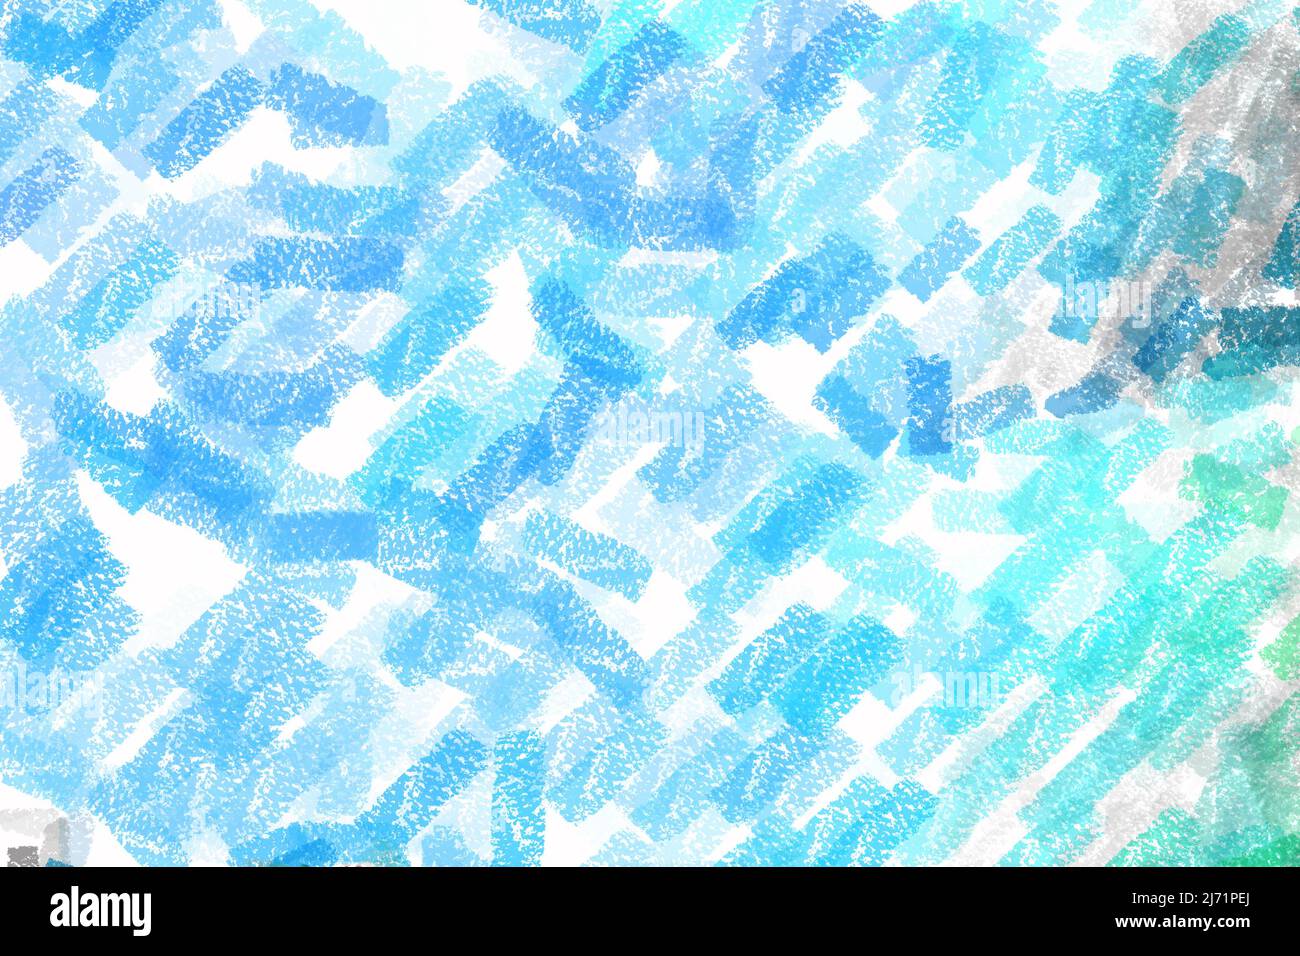 Textured pastel crayon lines abstract pattern. Digital illustration. Stock Photo